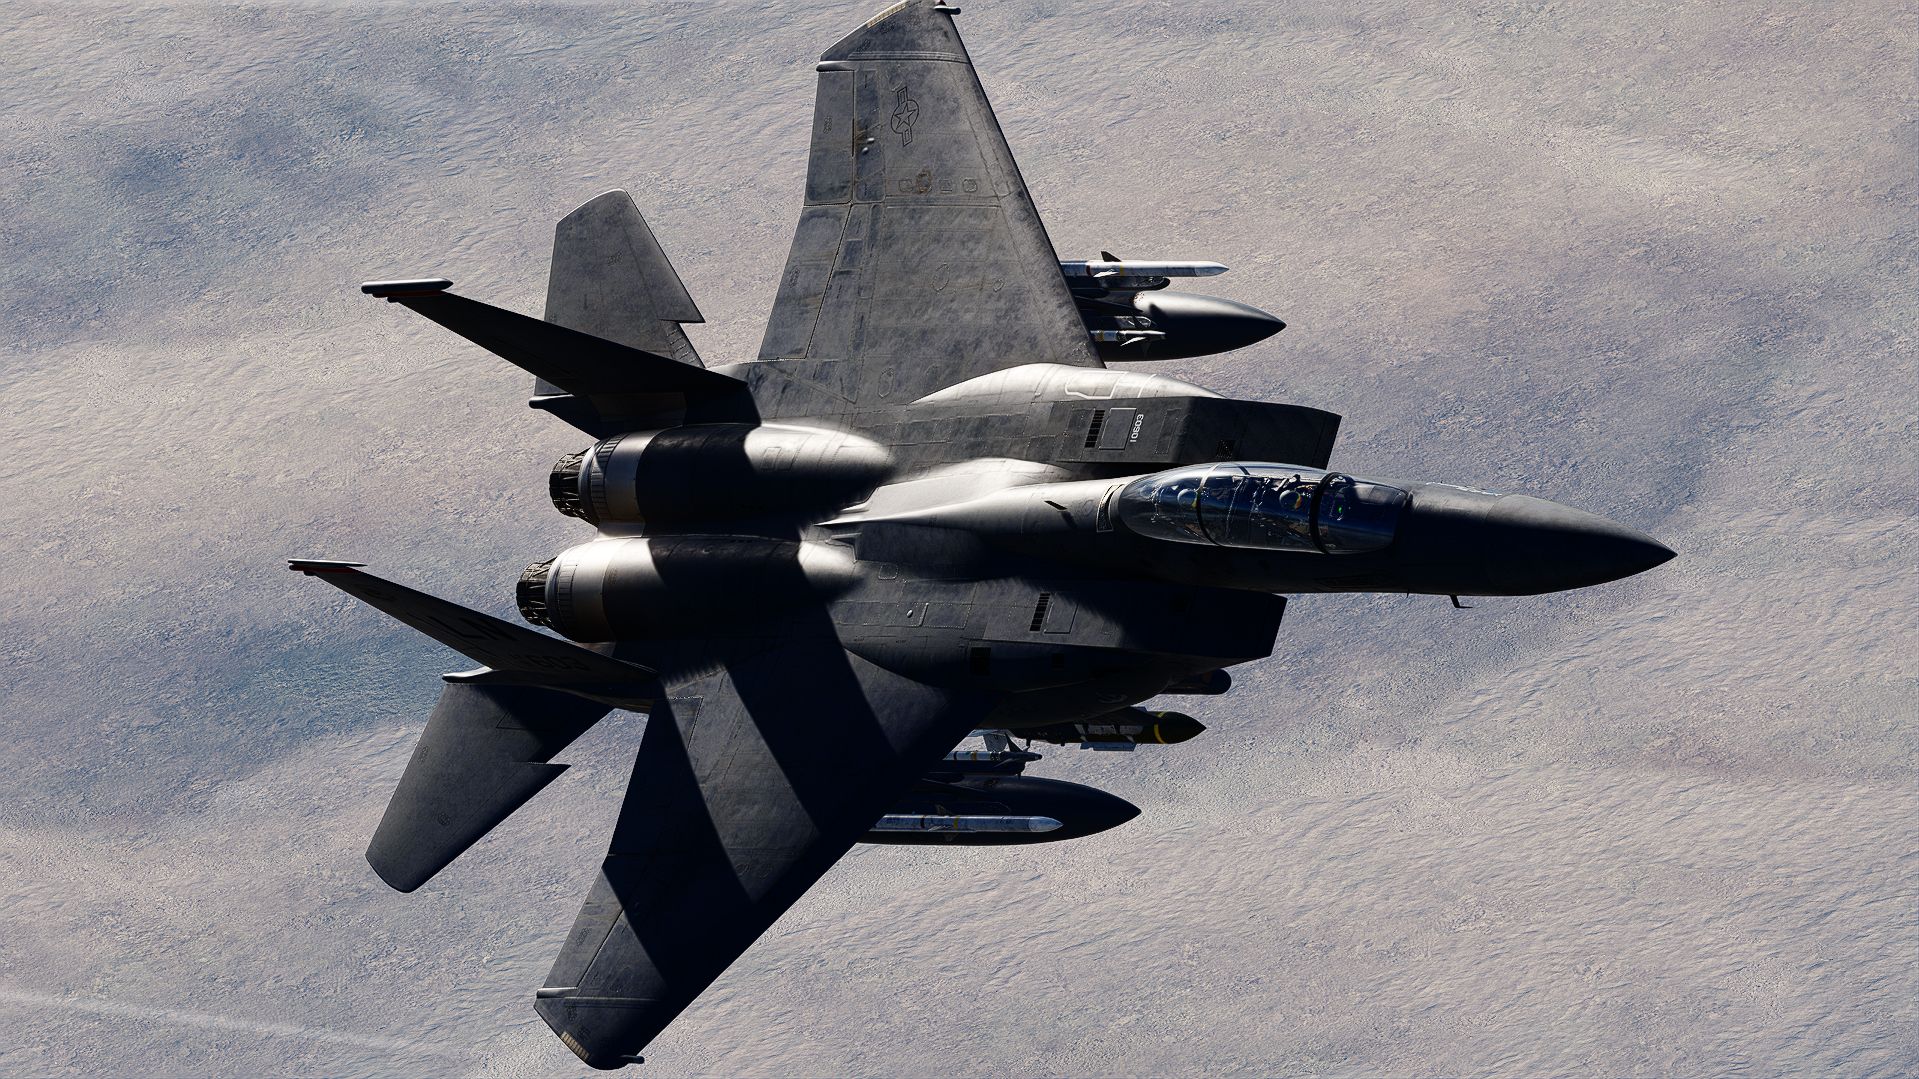 F-15E Strike eagle LN 91-603 "MR.Meeseeks" (REWORKED)